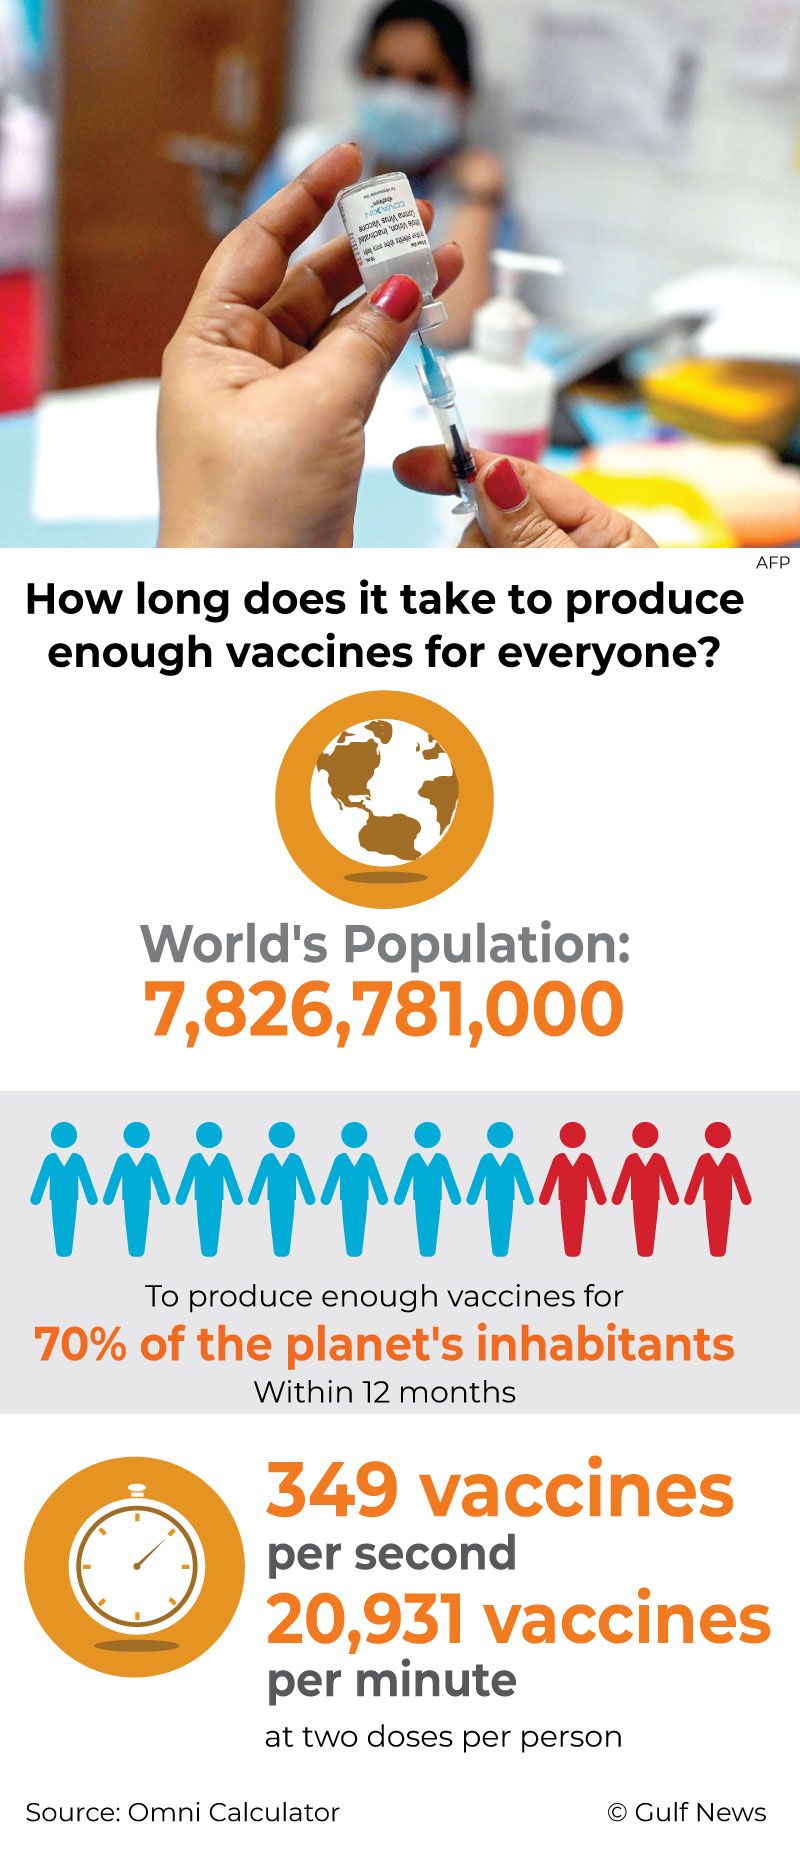 VAccine Production 